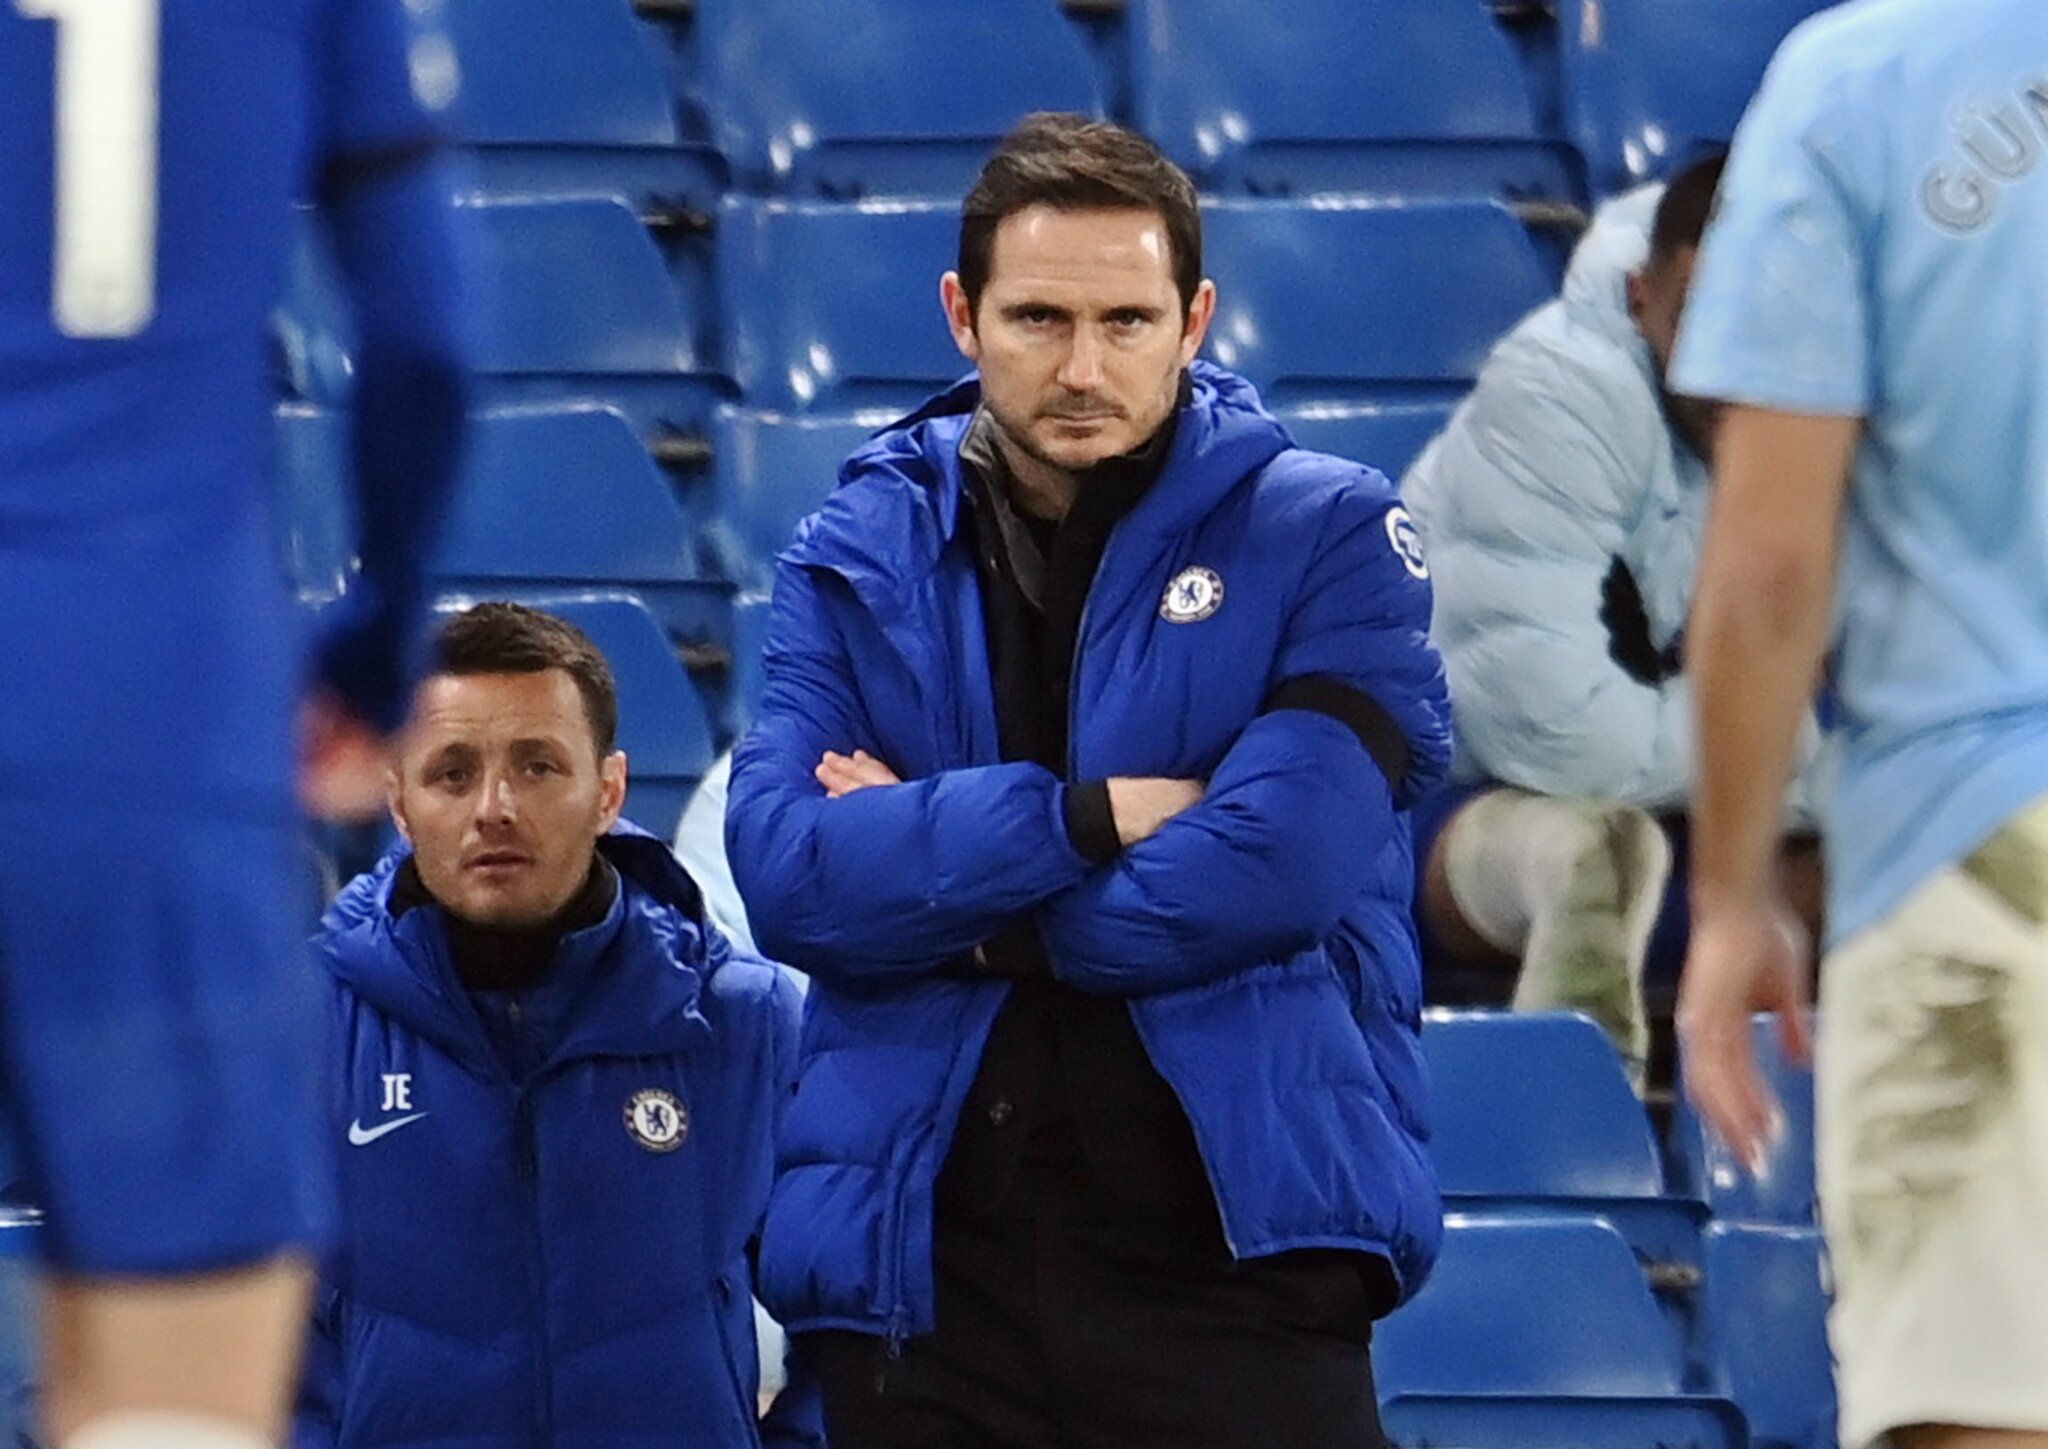  Fotbal: Frank Lampard a acceptat rolul de antrenor interimar la Chelsea